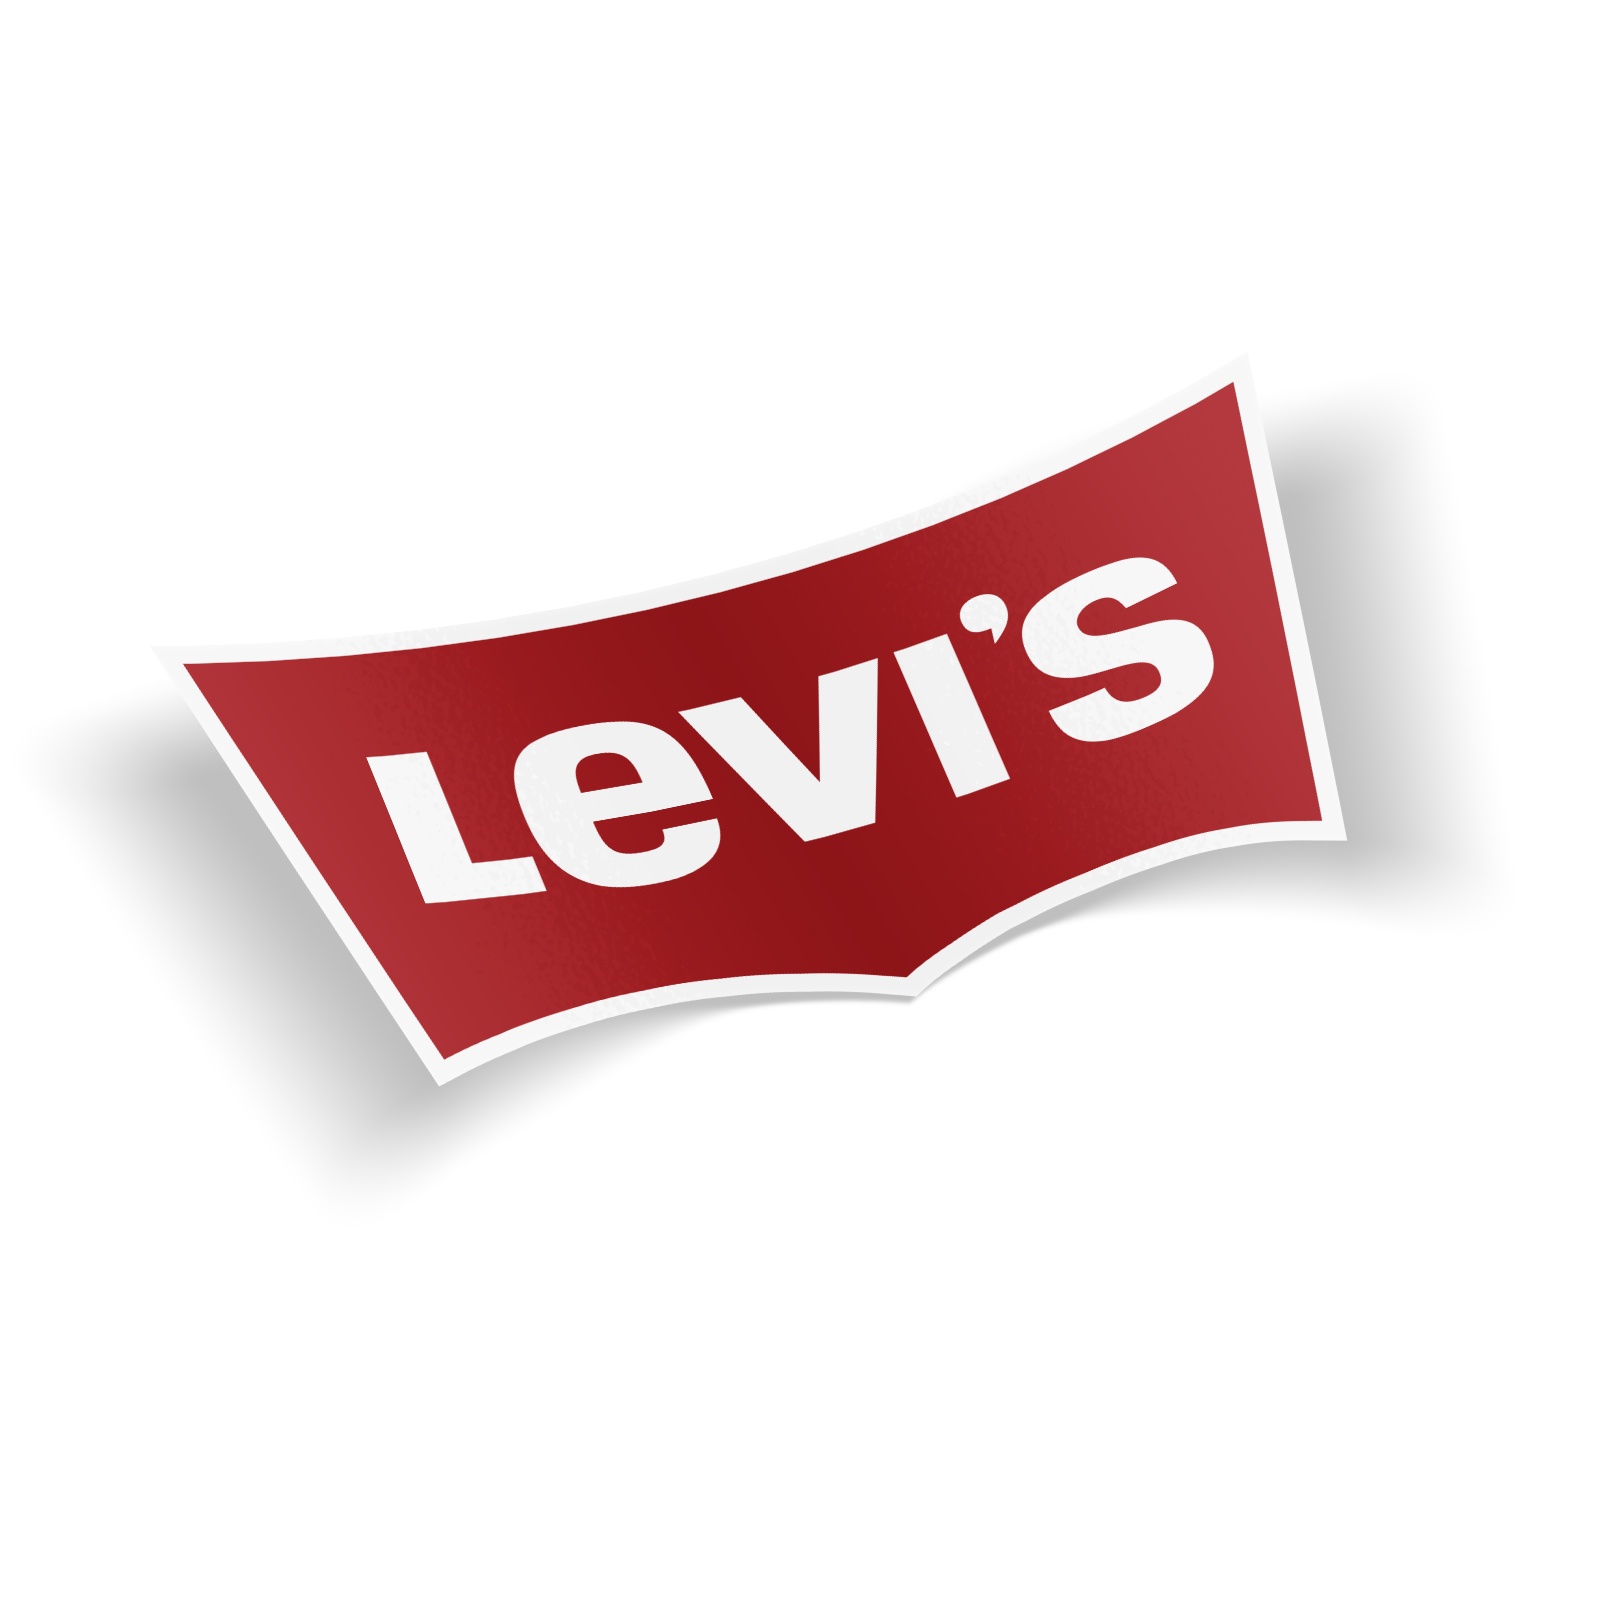 Магазин лейбл. Levis бренд. Левайс логотип. Наклейка Левис. Левис фирма значок.